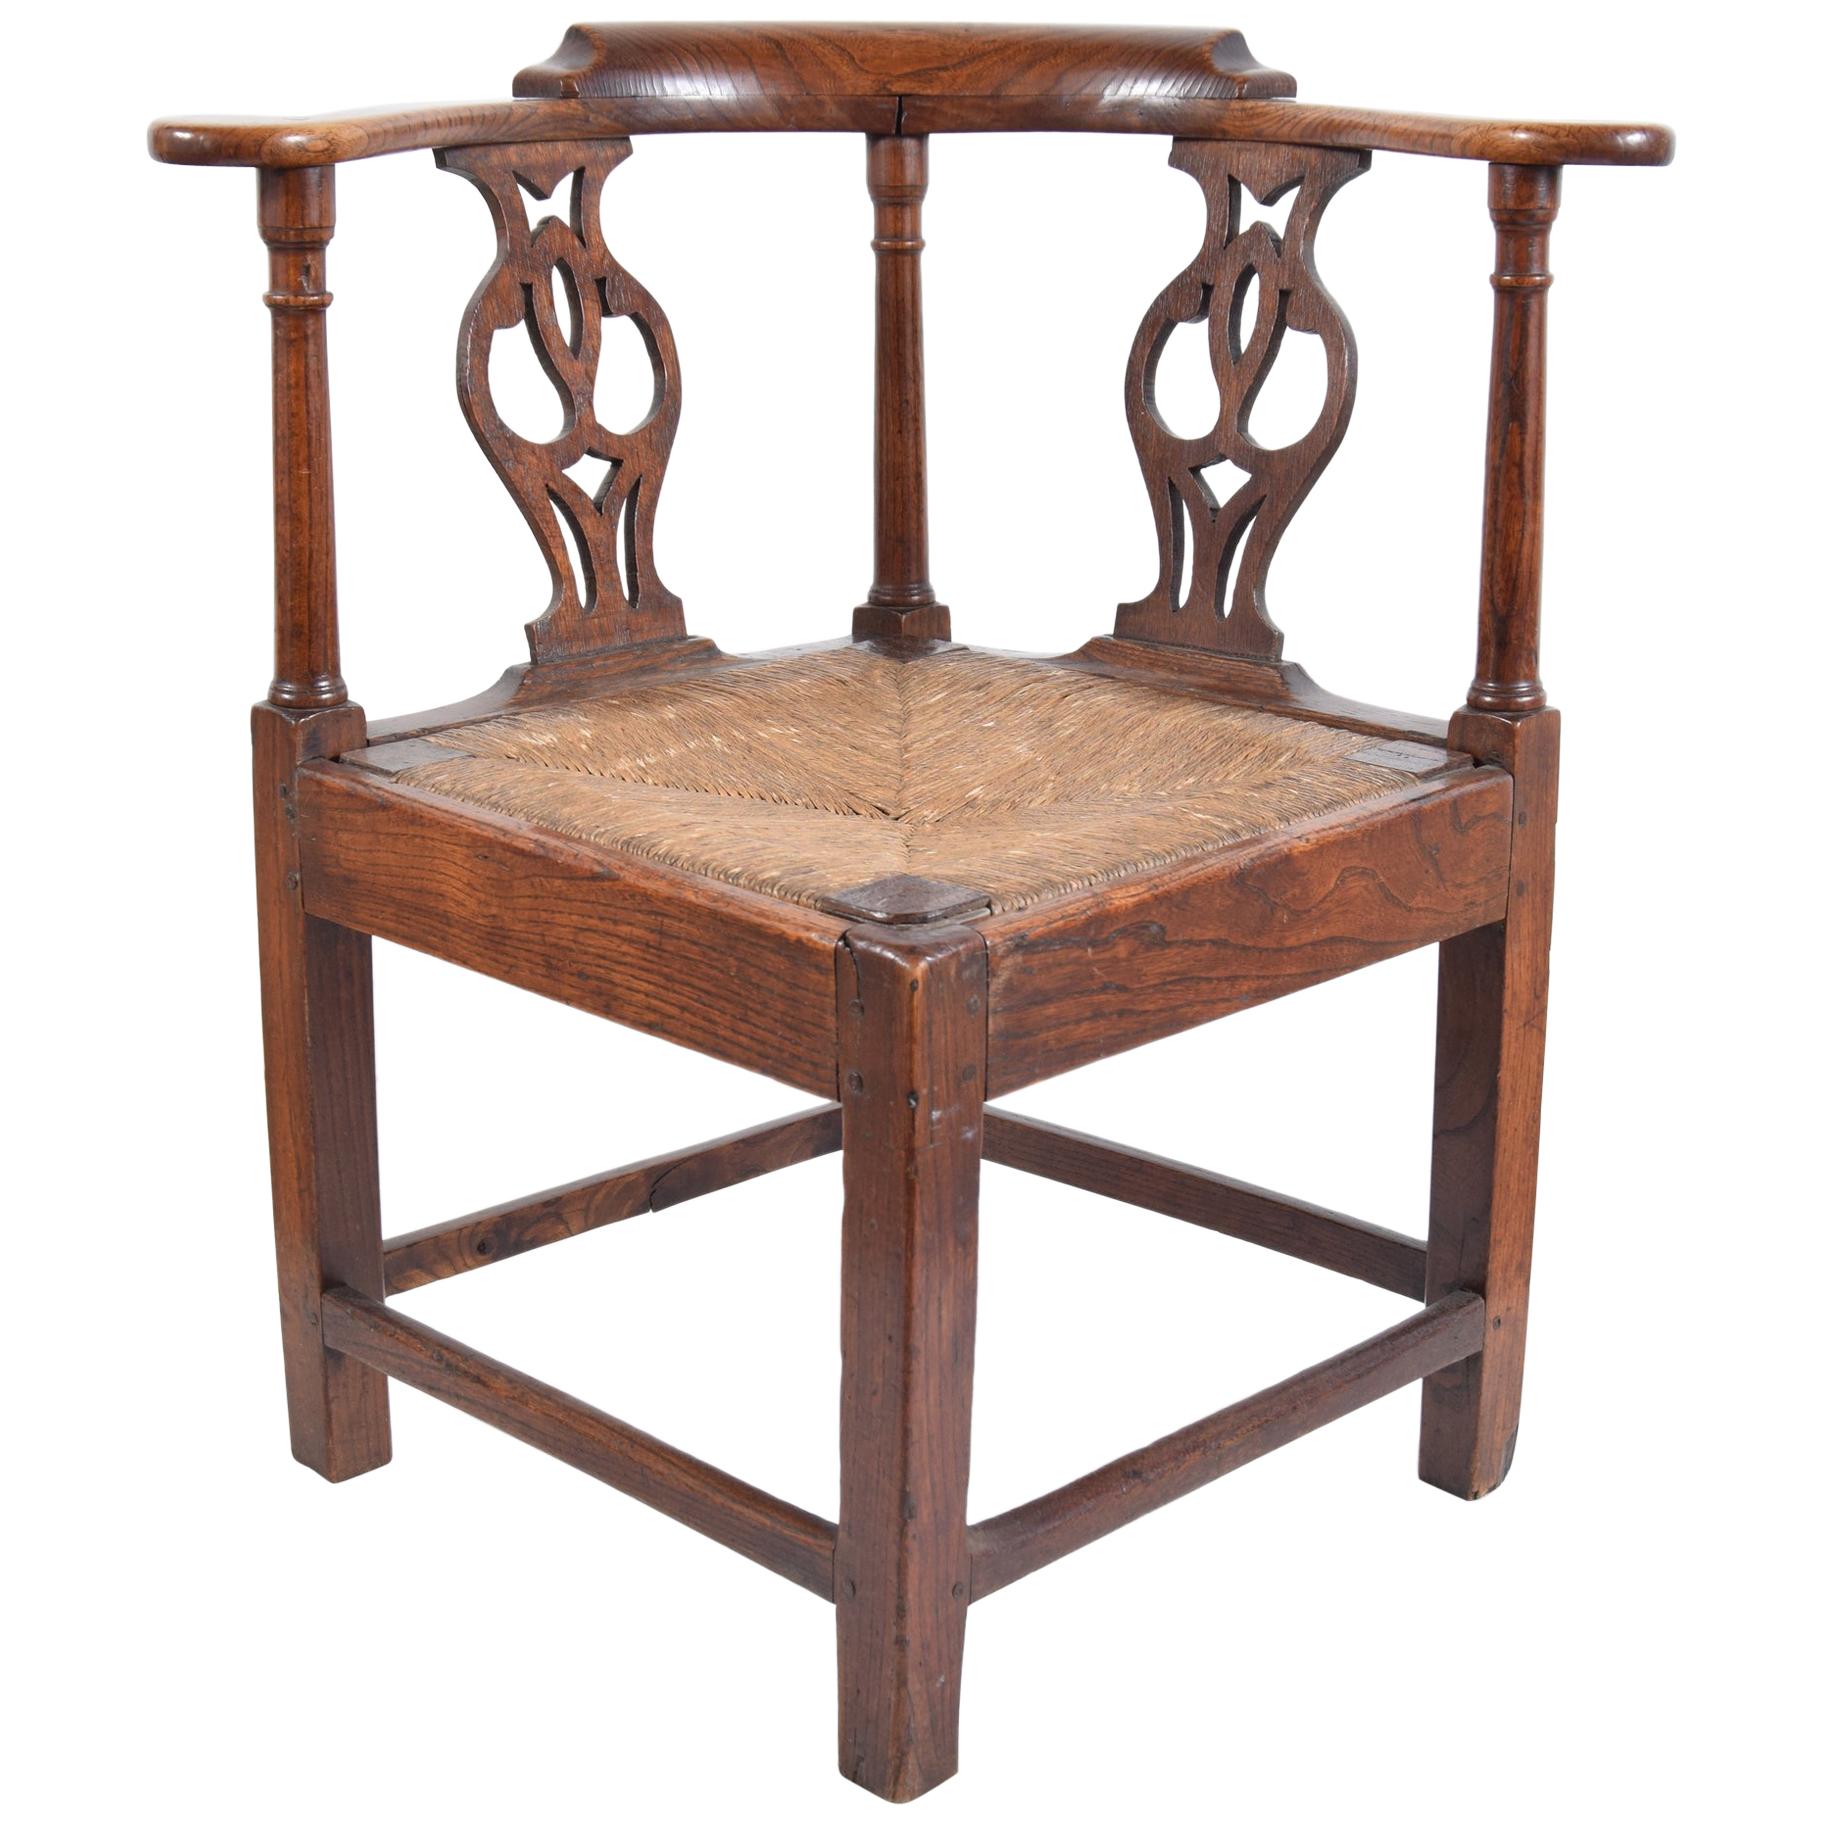 Elm Chippendale Corner Chair, circa 1780-1820